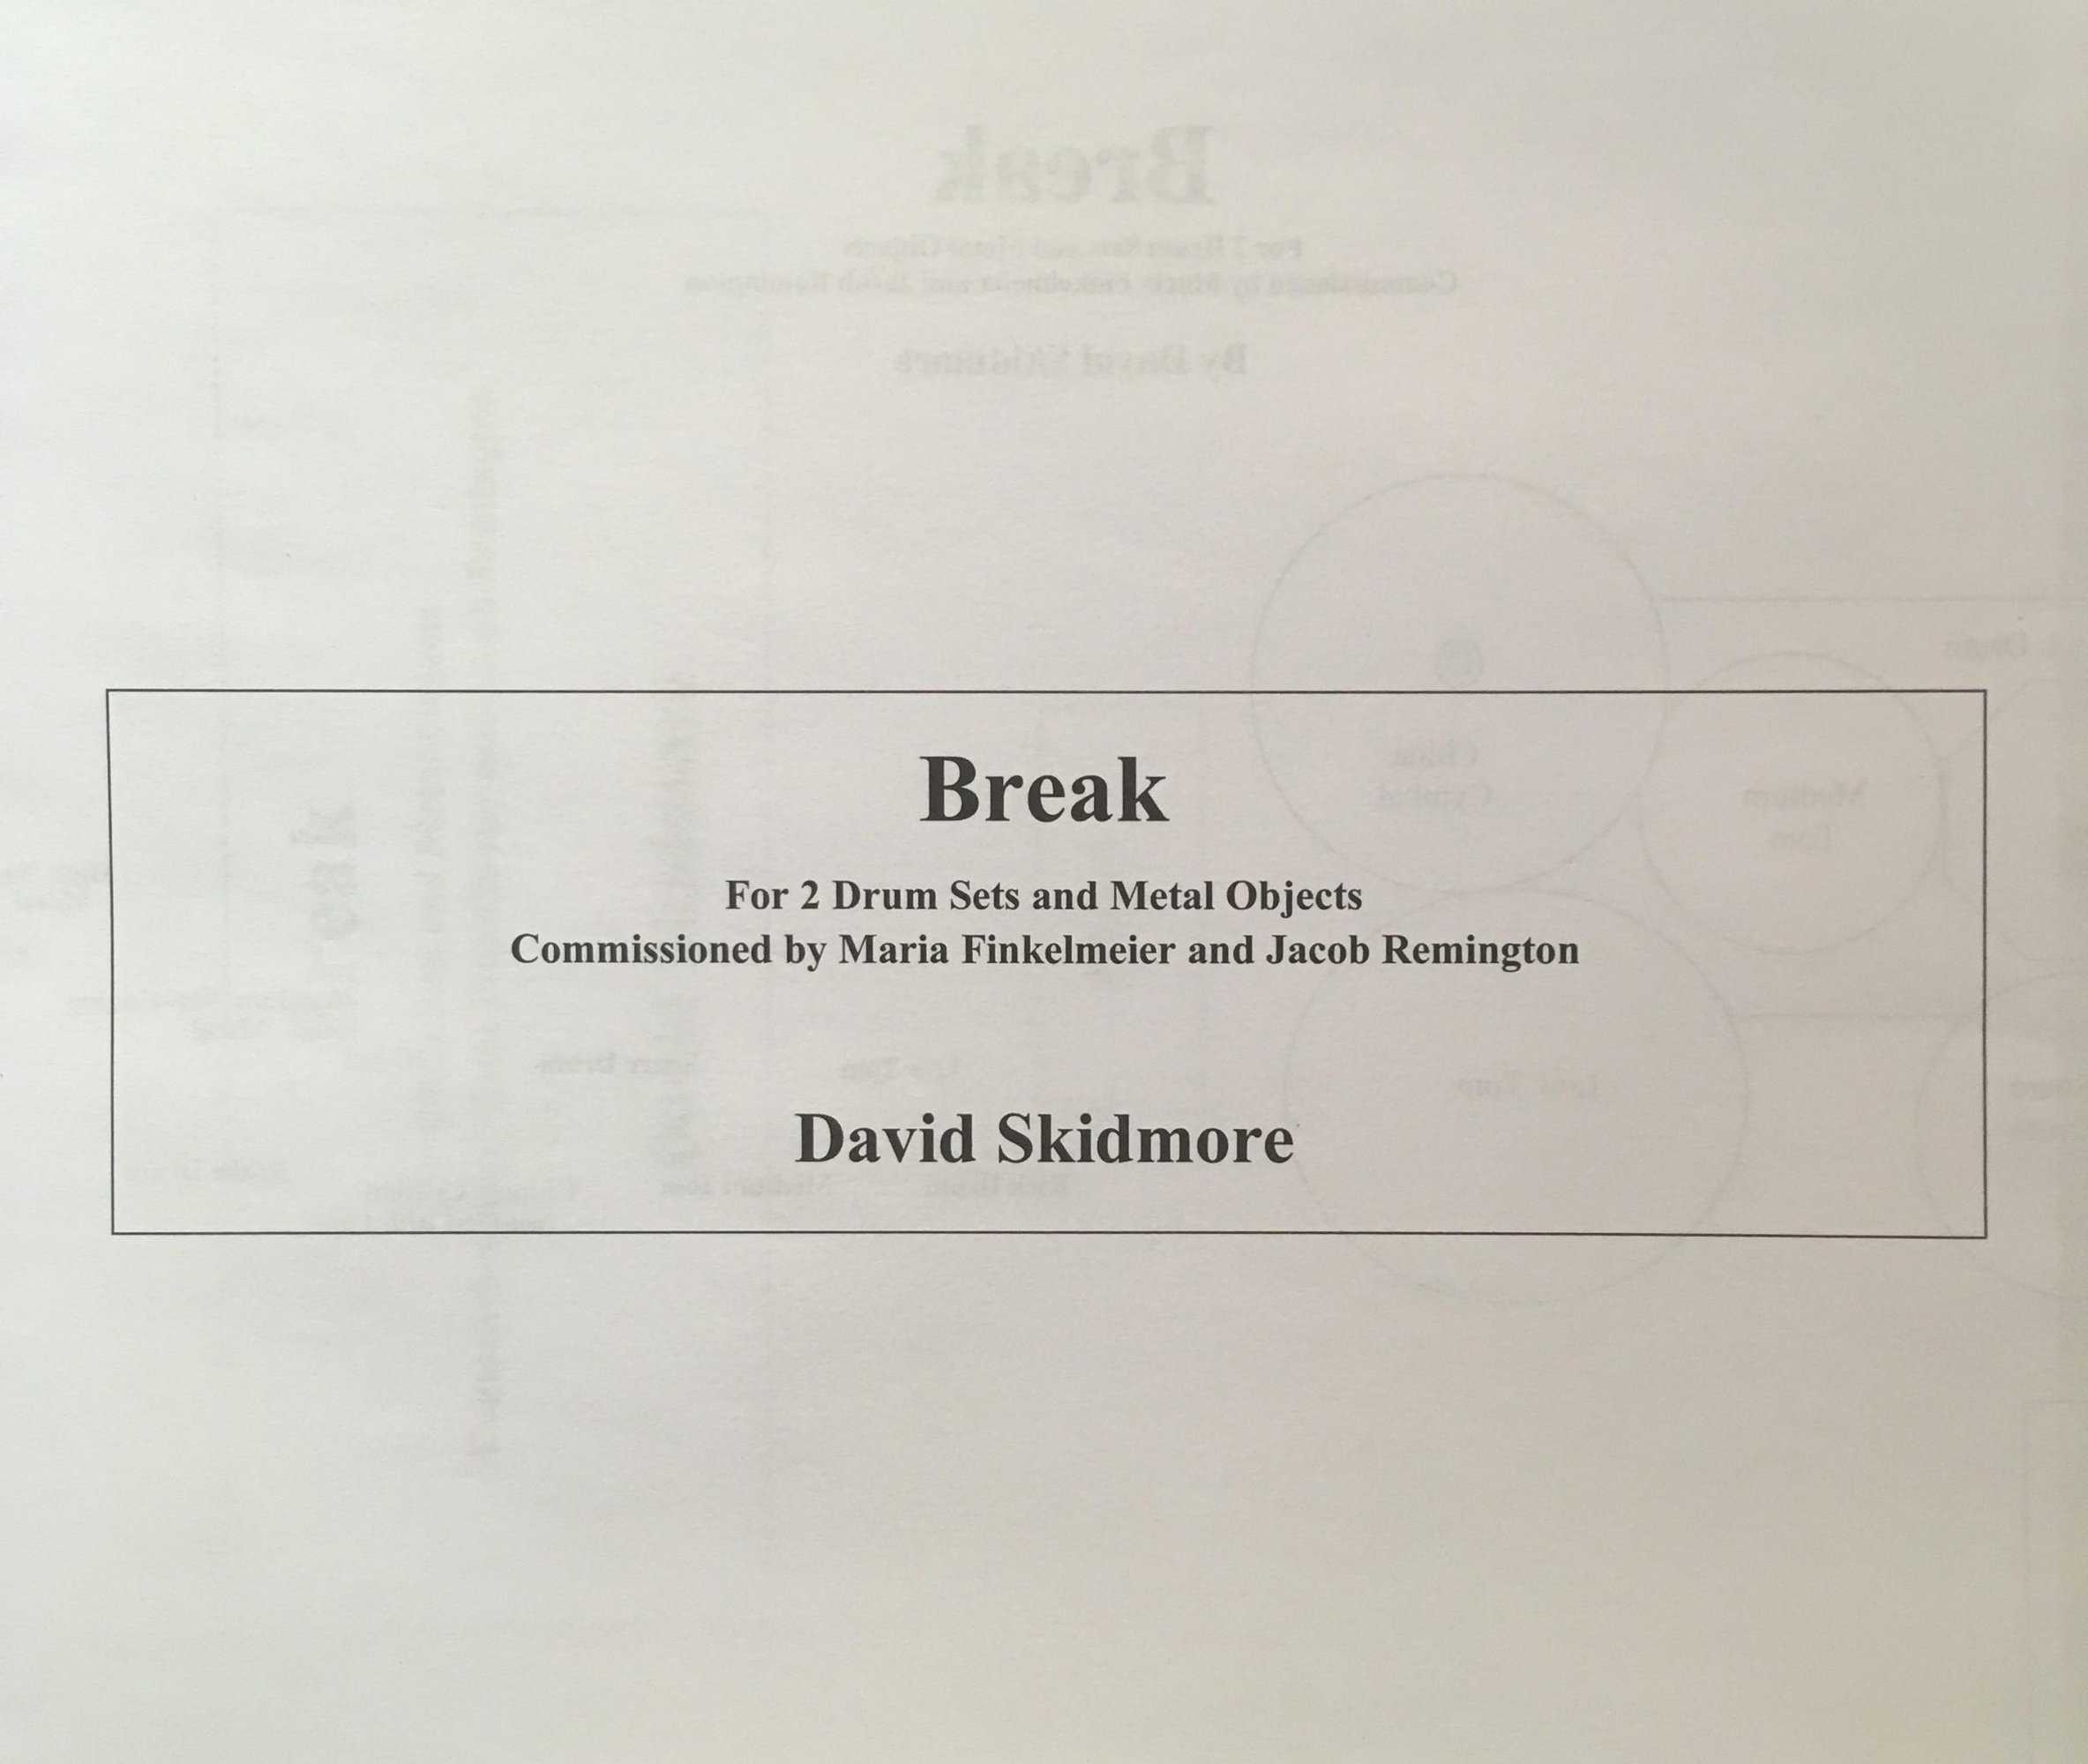 Break by David Skidmore